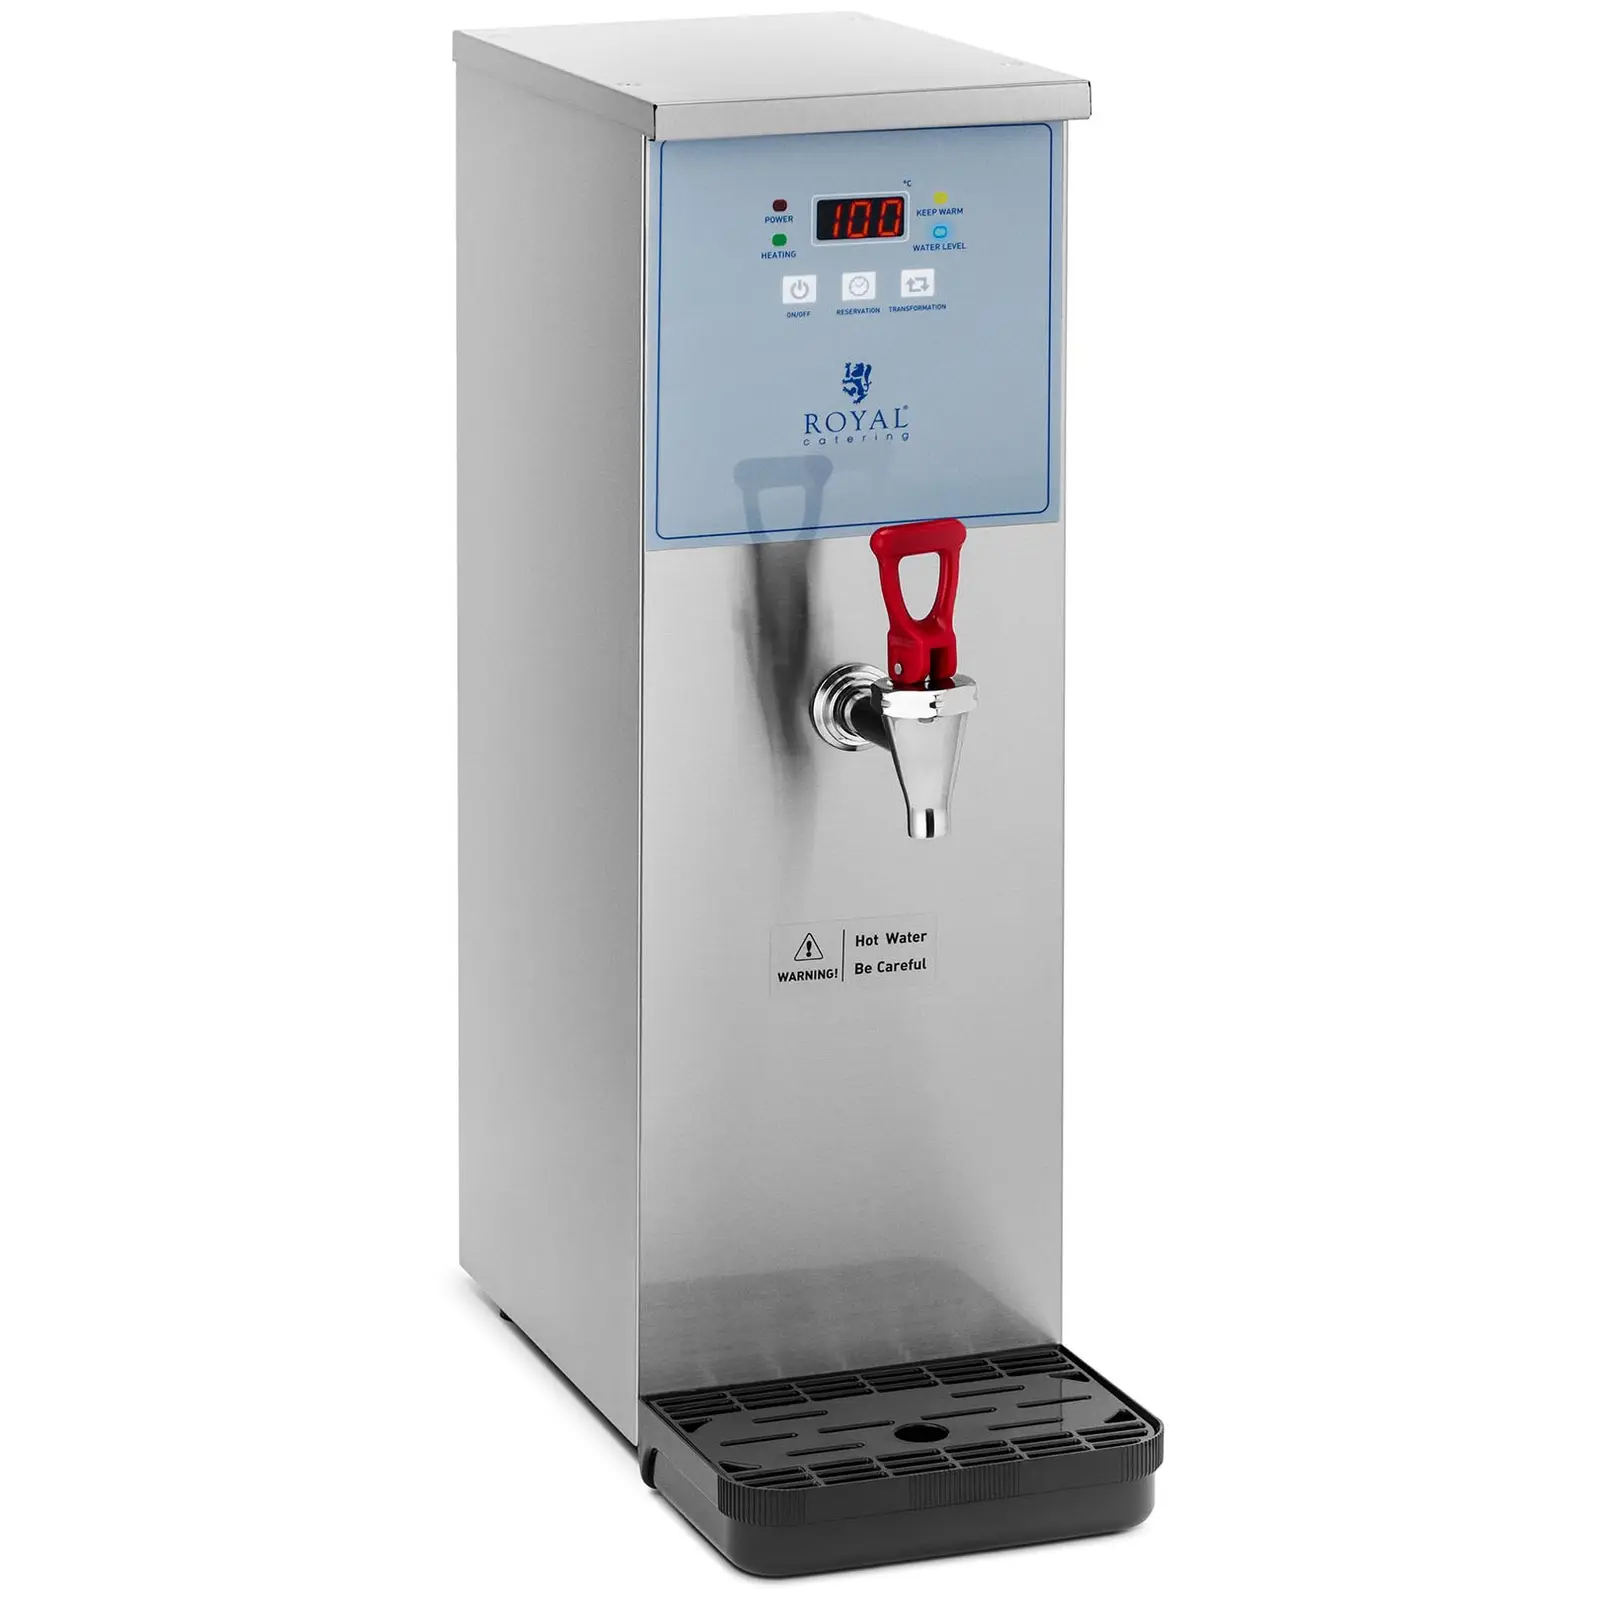 Varmtvannsdispenser - 10 L - 3000 W - vanntilkobling - Royal Catering